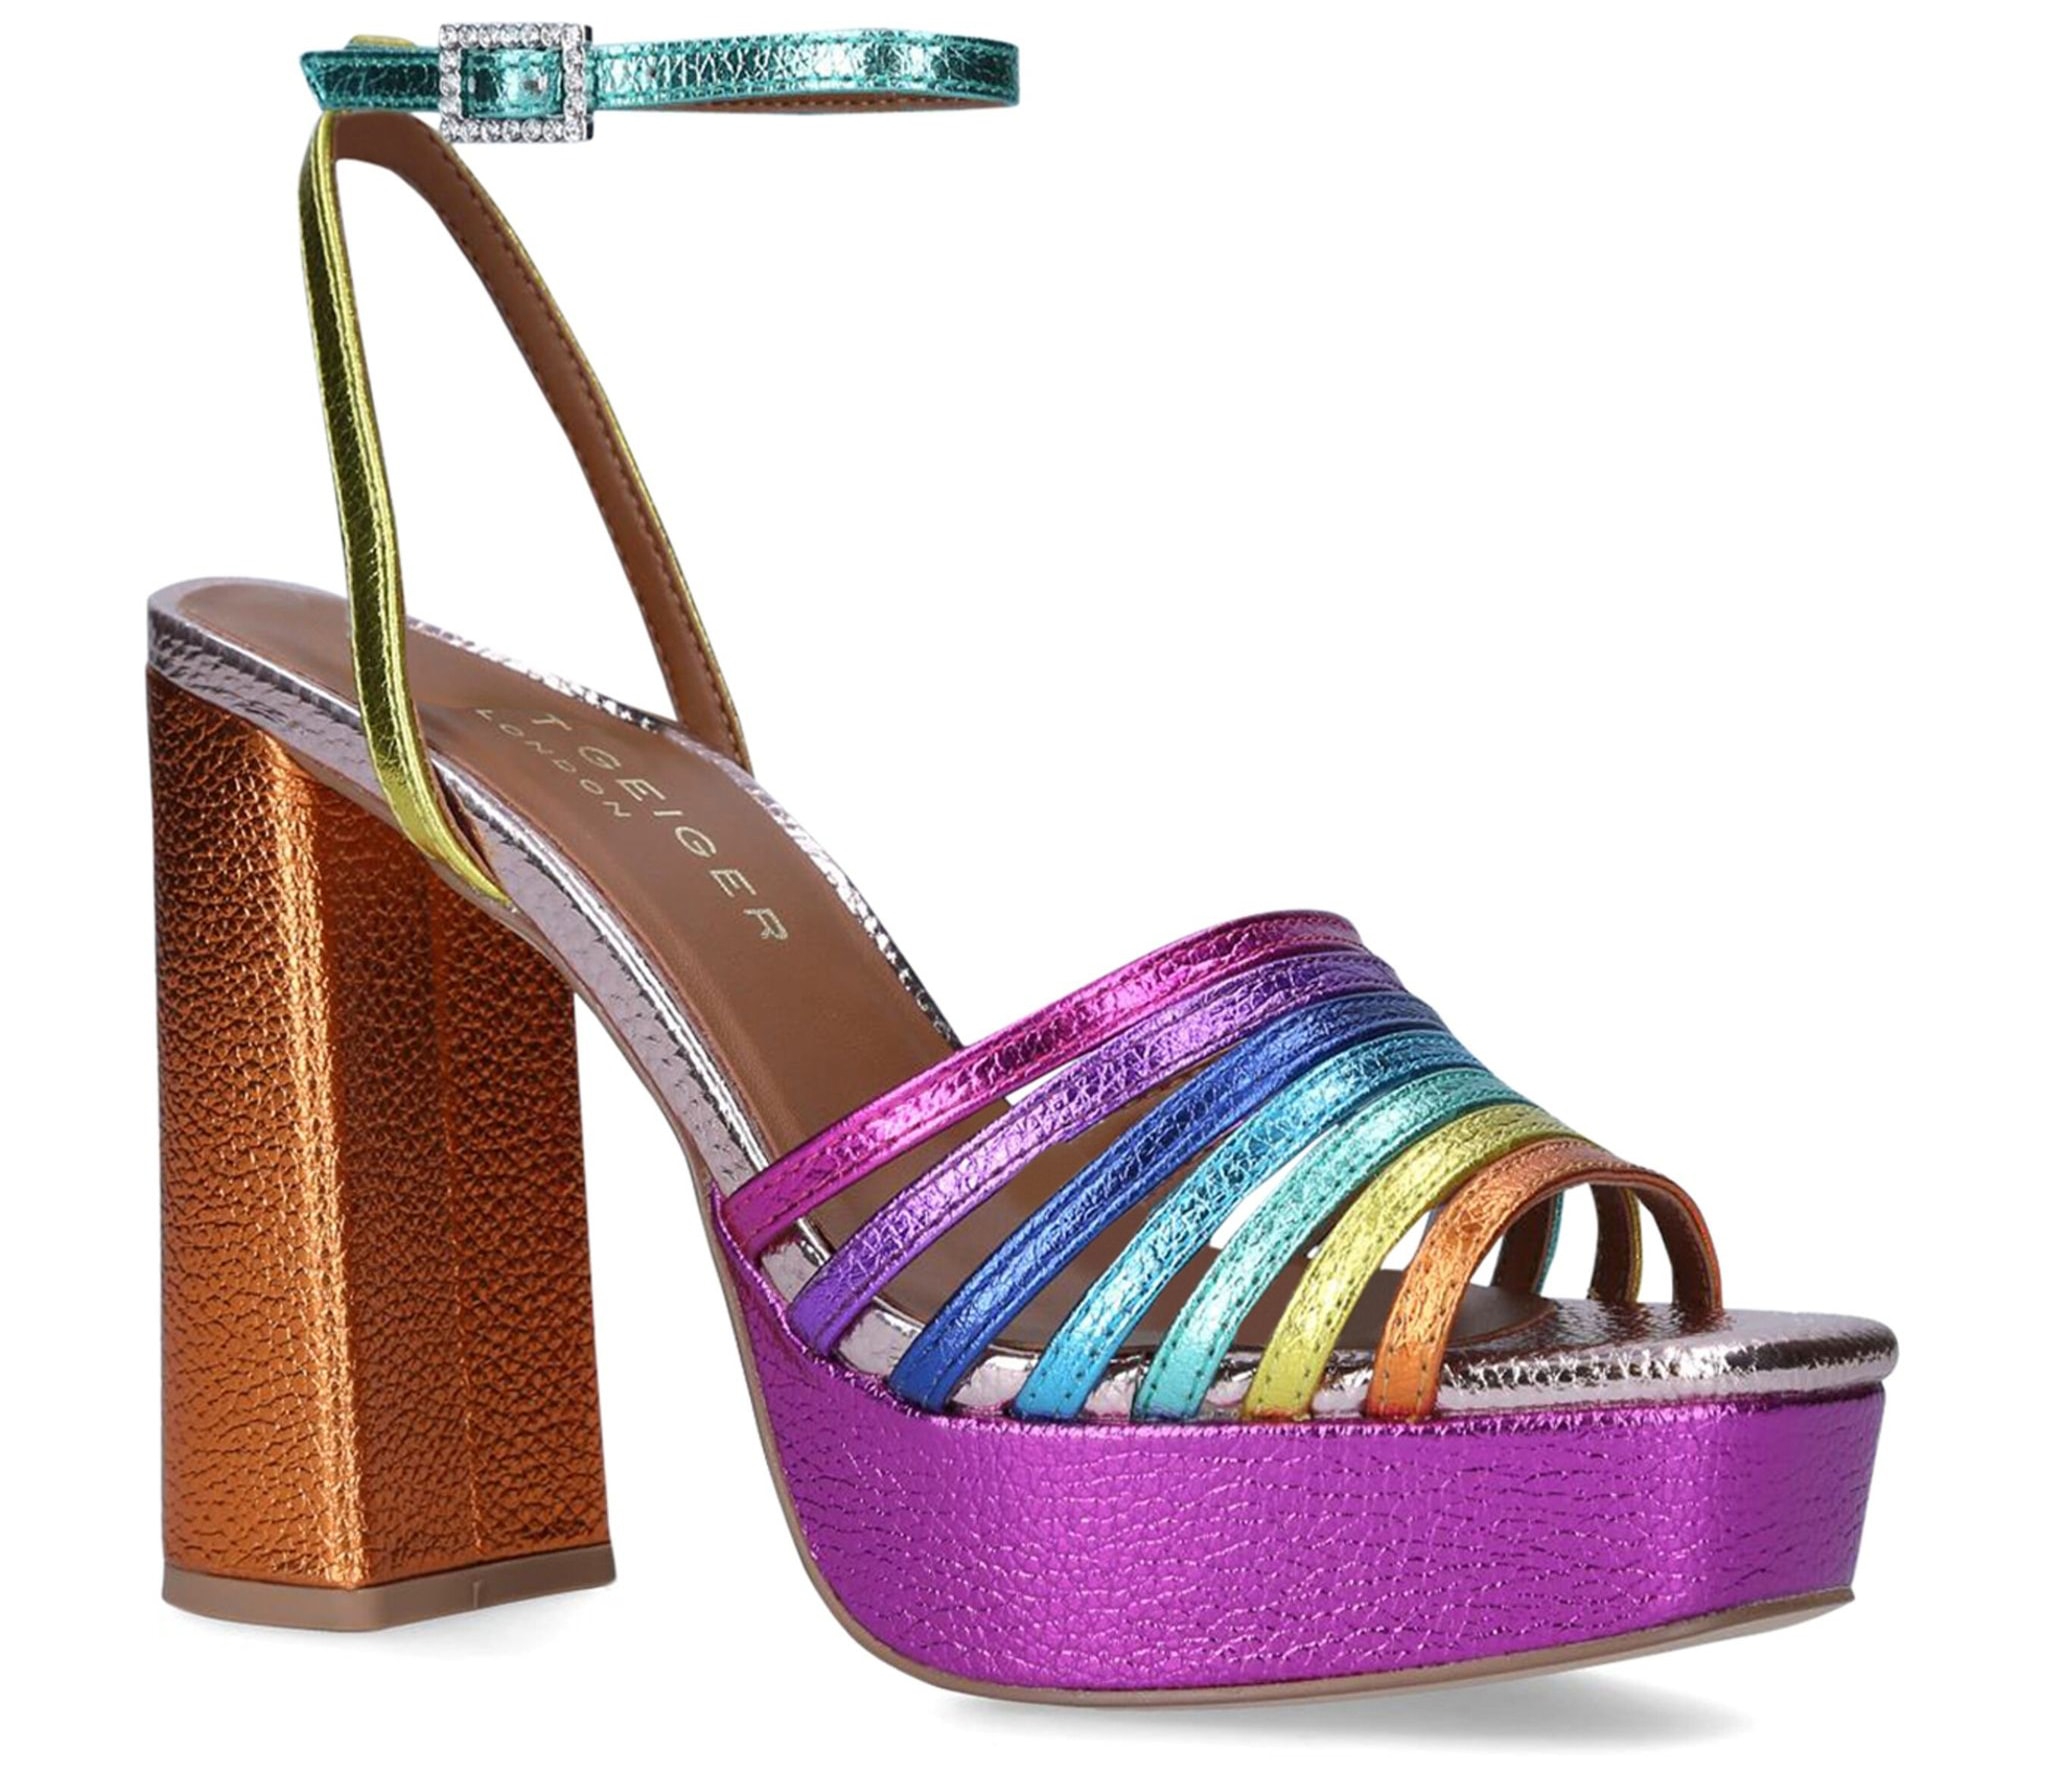 The Kurt Geiger Pierra sandals feature metallic multicolored straps, platforms, and block heels